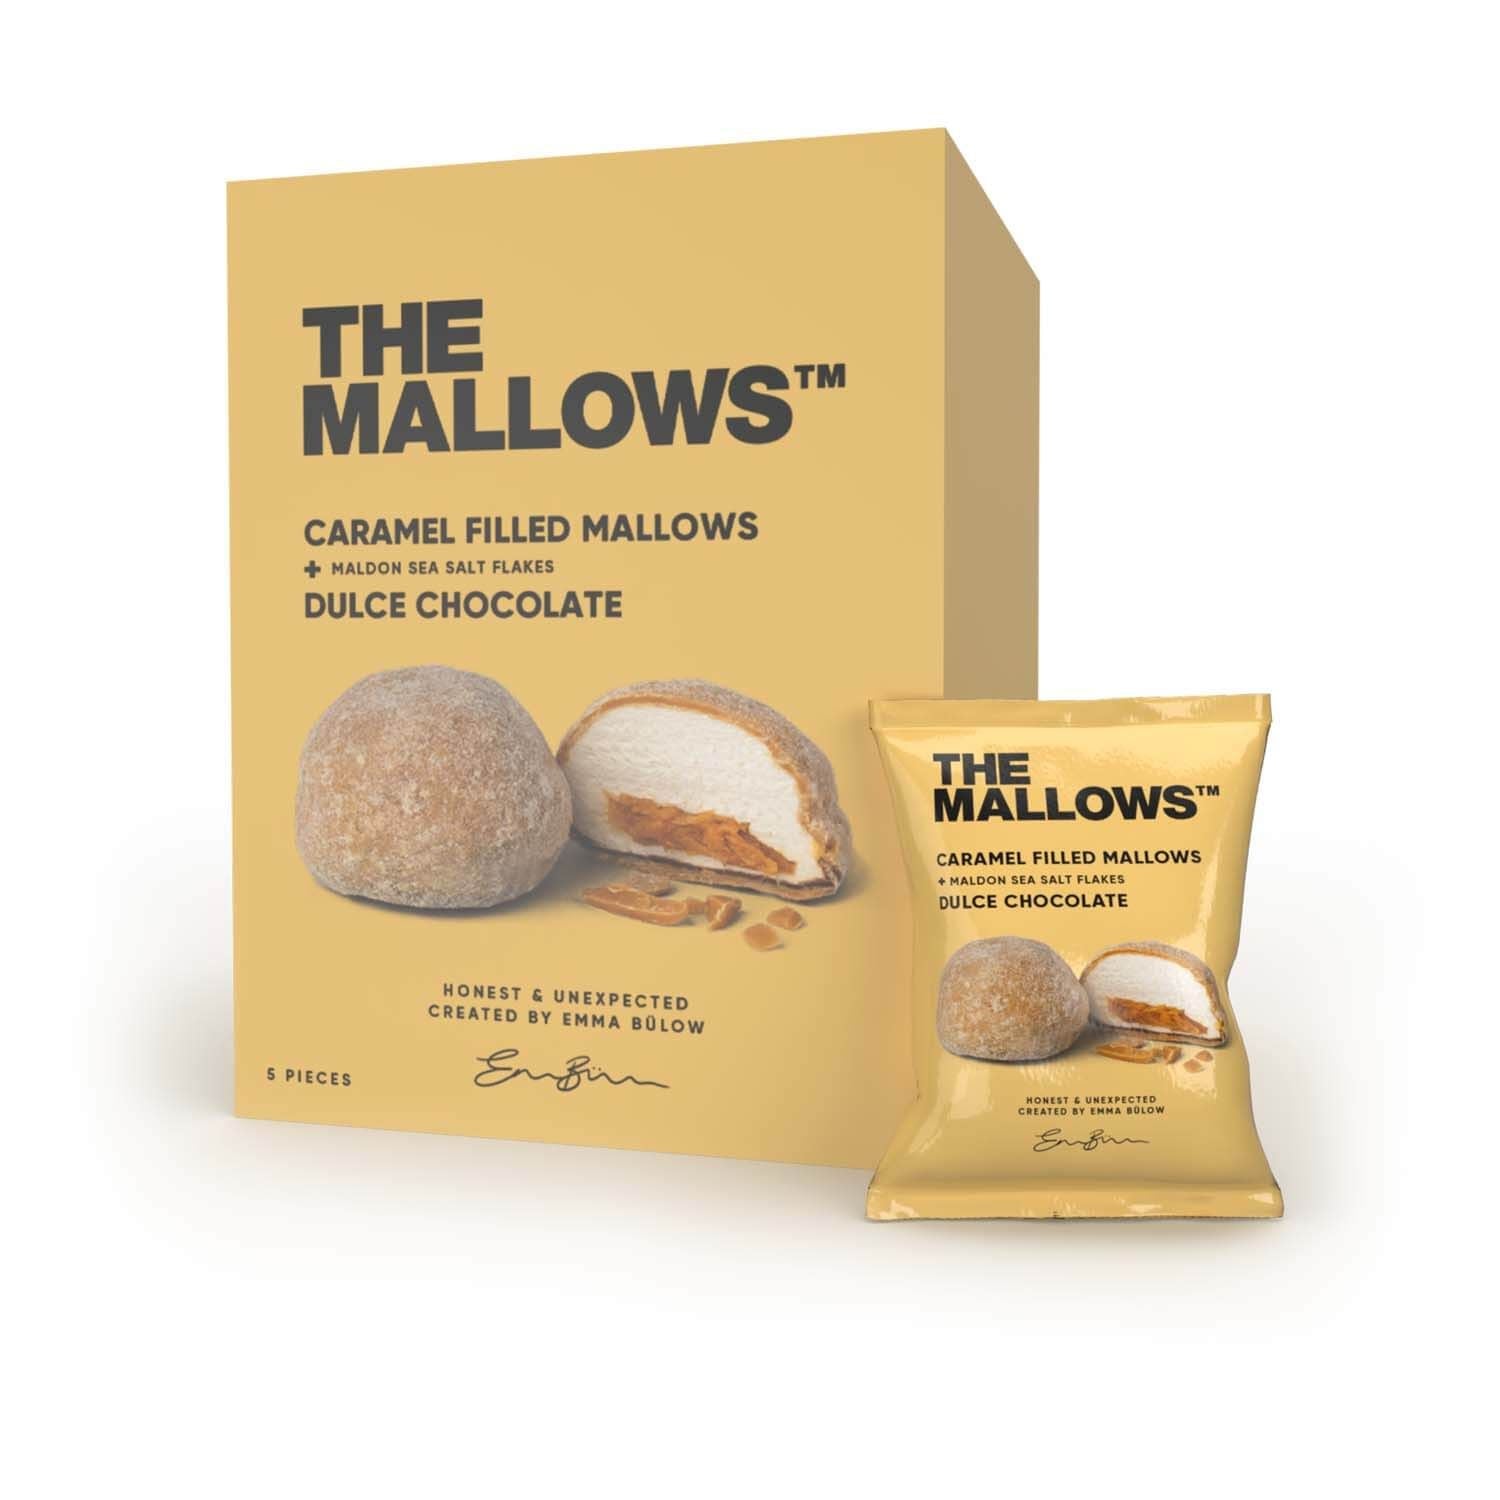 The Mallows Marshmallow con ripieno di caramello e cioccolato cioccolato, 18g